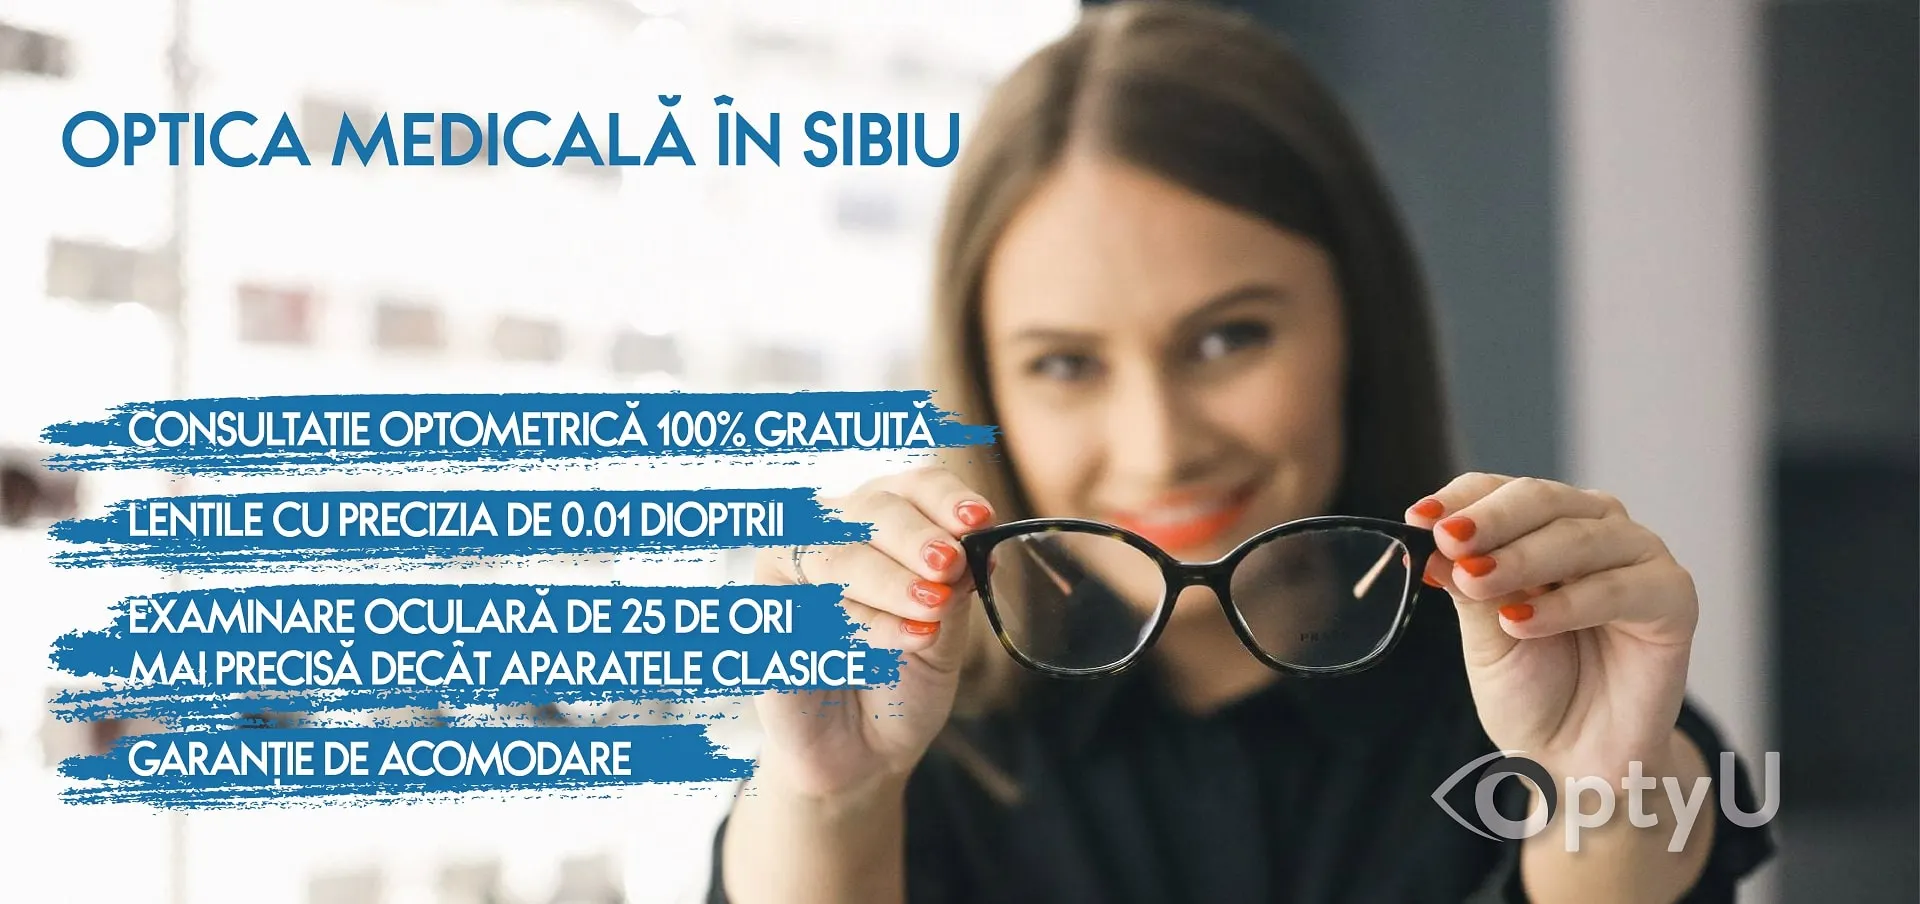 midnight Explicitly Footpad Optica Medicala OptyU Sibiu: ochelari de vedere si soare ▷